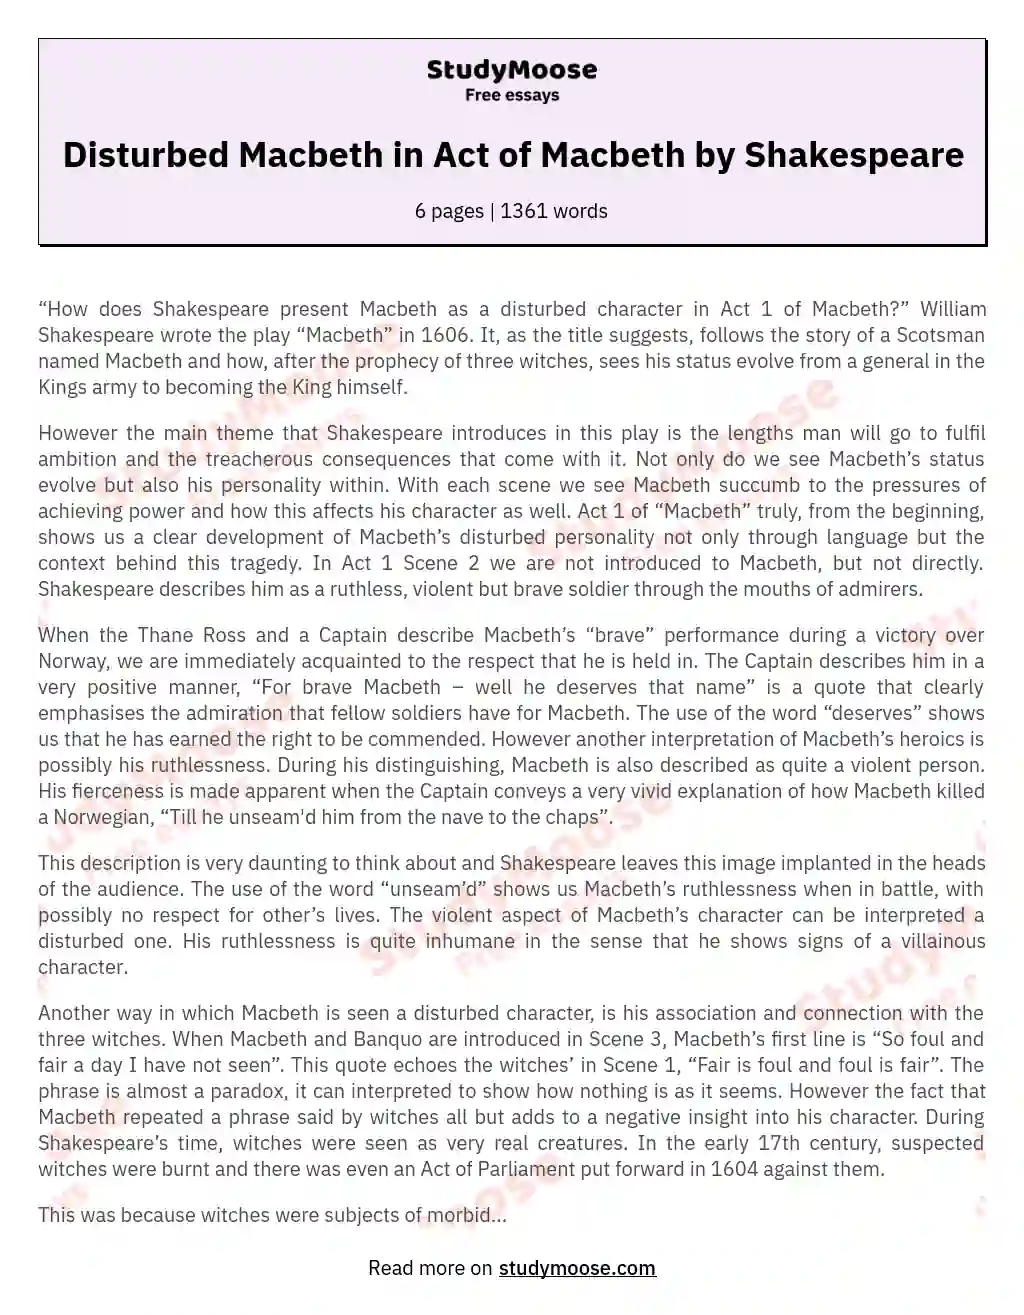 Disturbed Macbeth in Act of Macbeth by Shakespeare essay